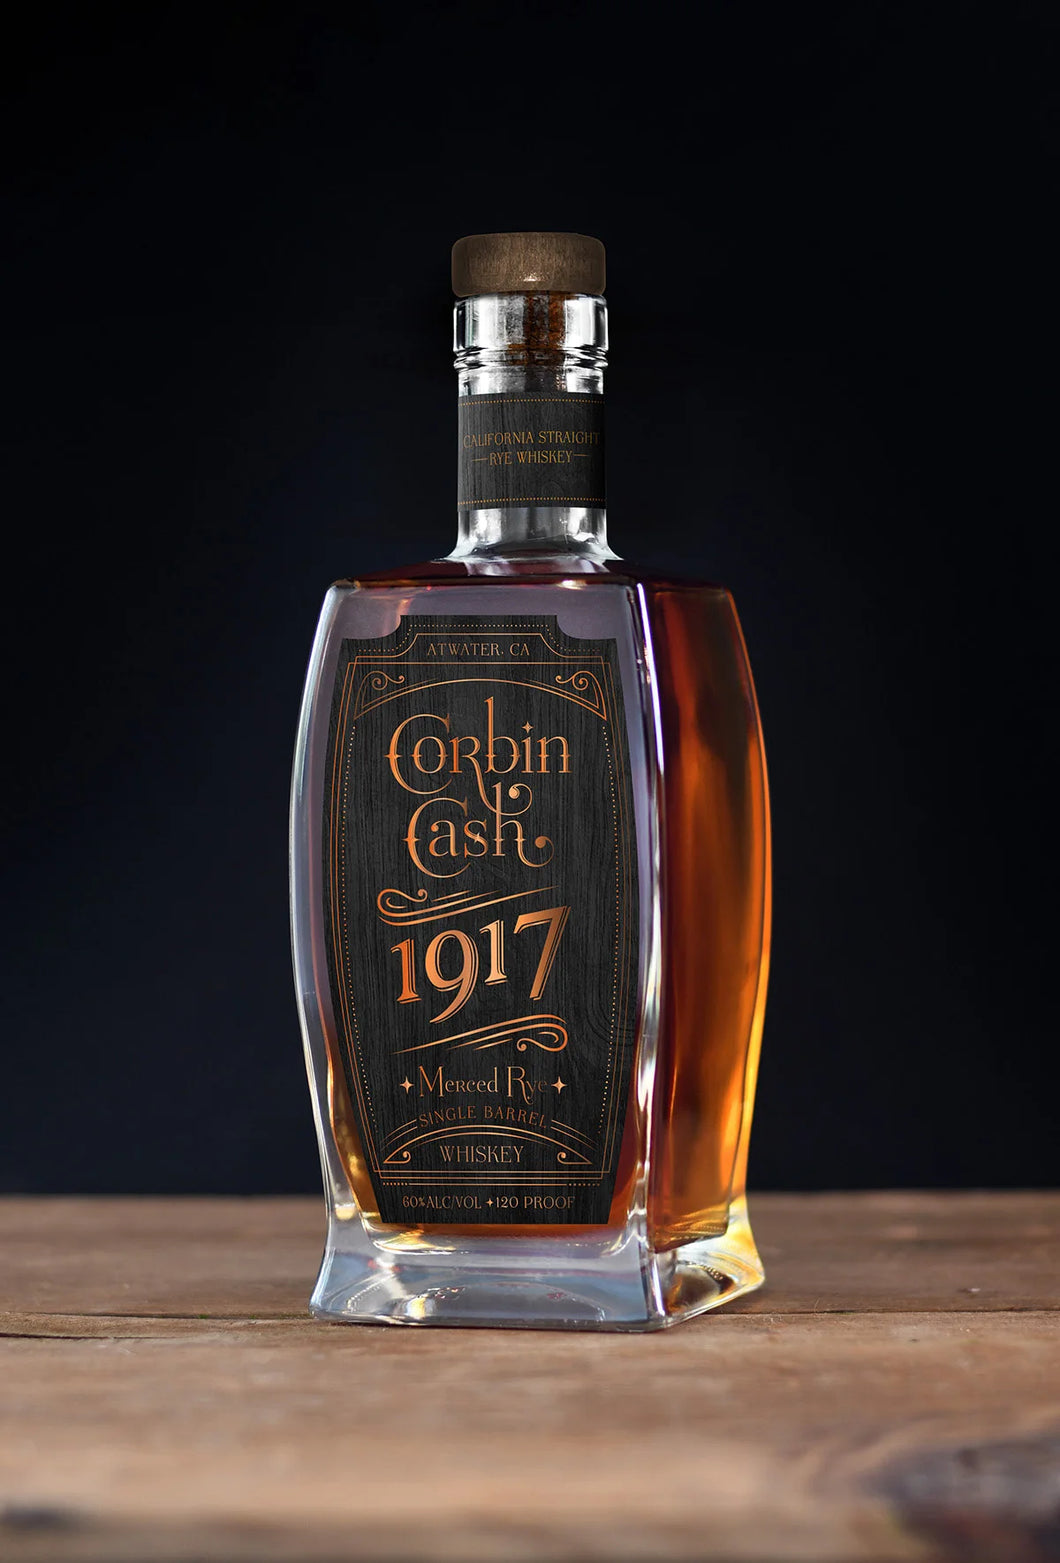 Corbin Cash 1917 Merced Rye Whiskey